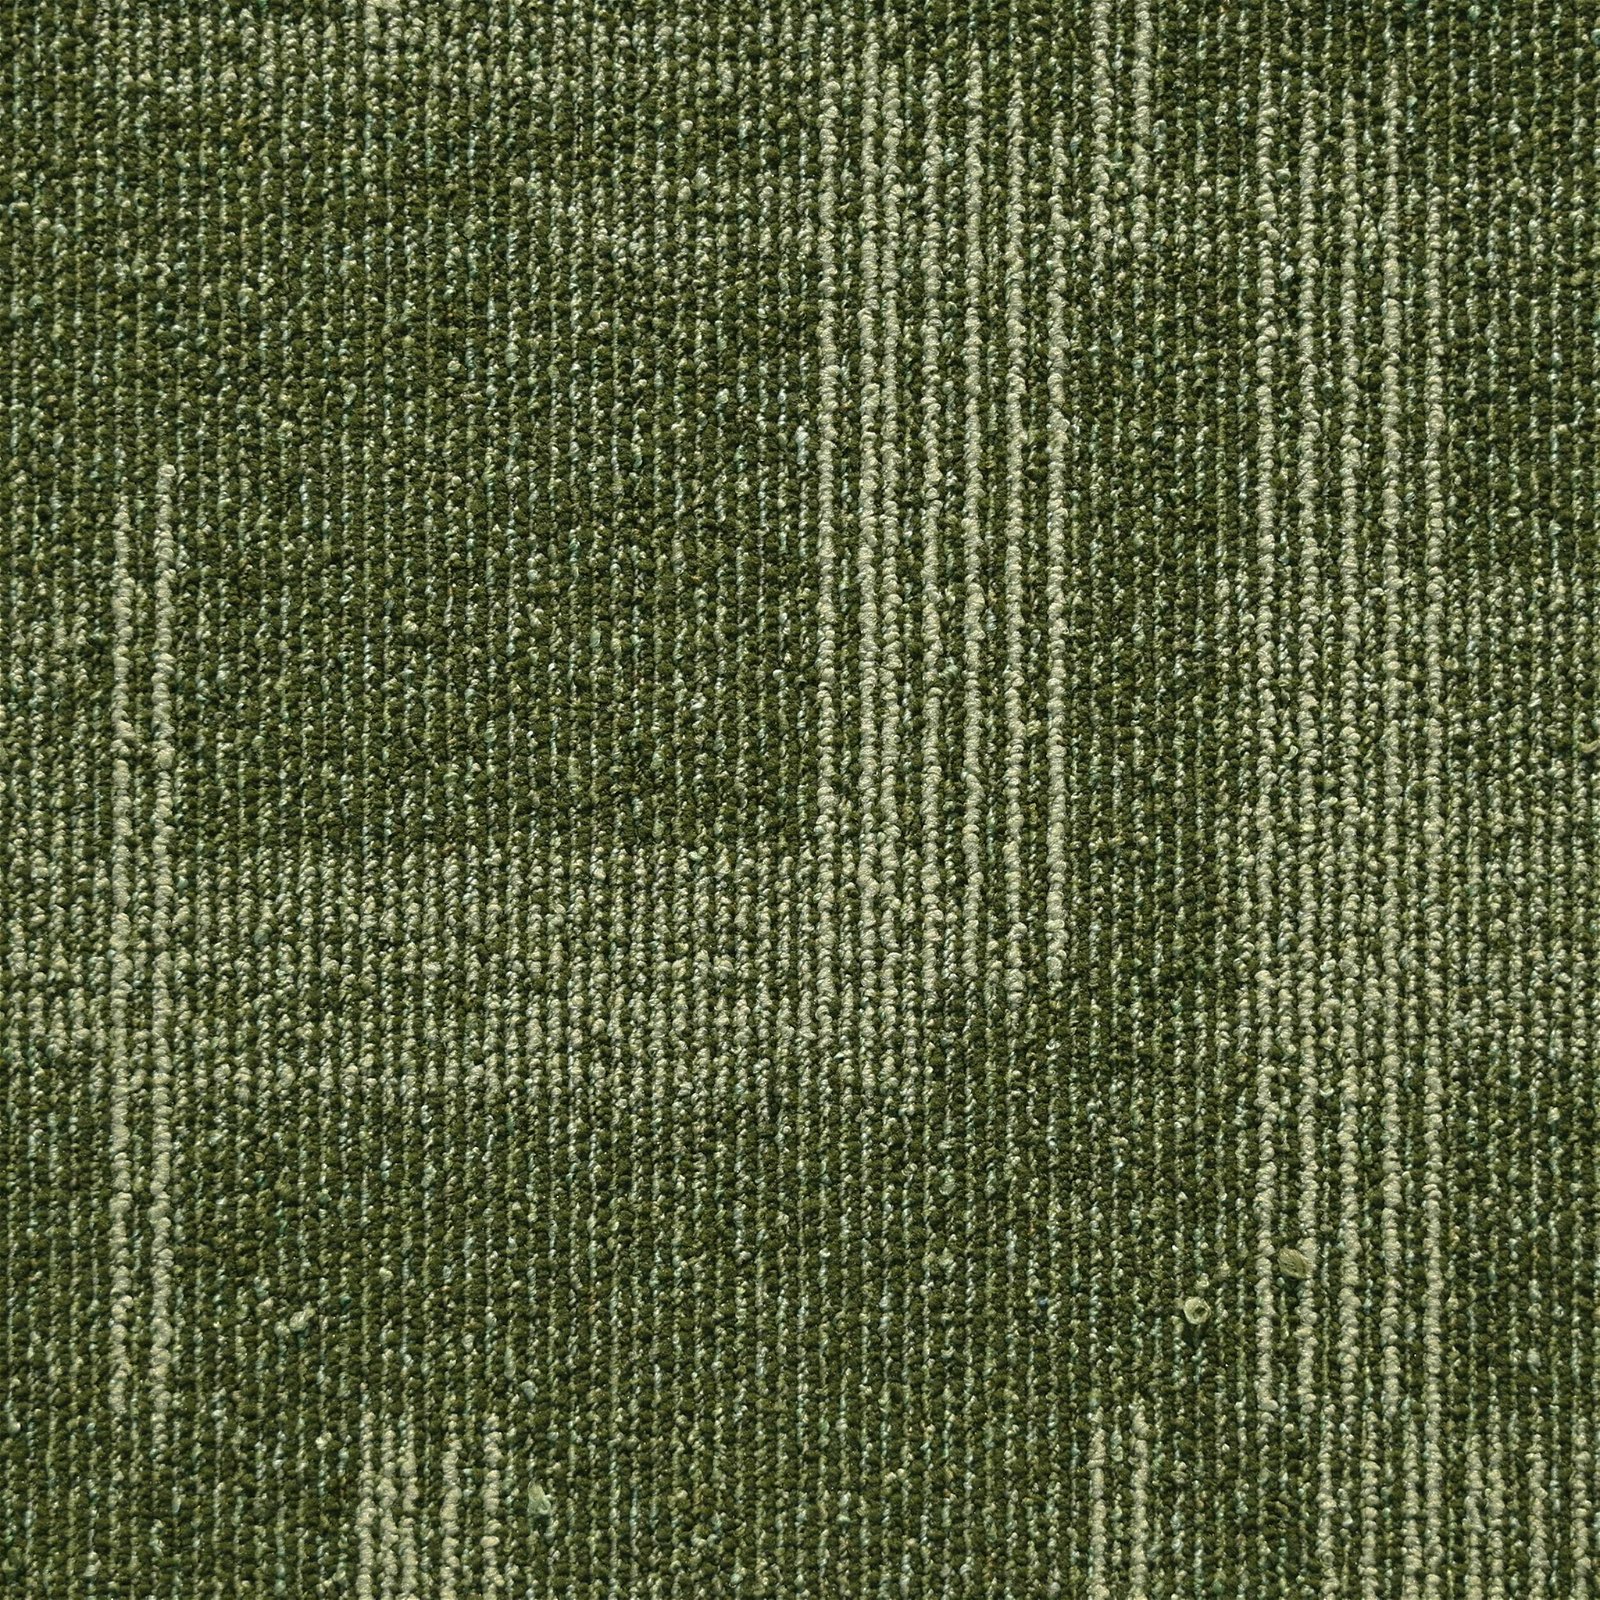 Tile carpet 3